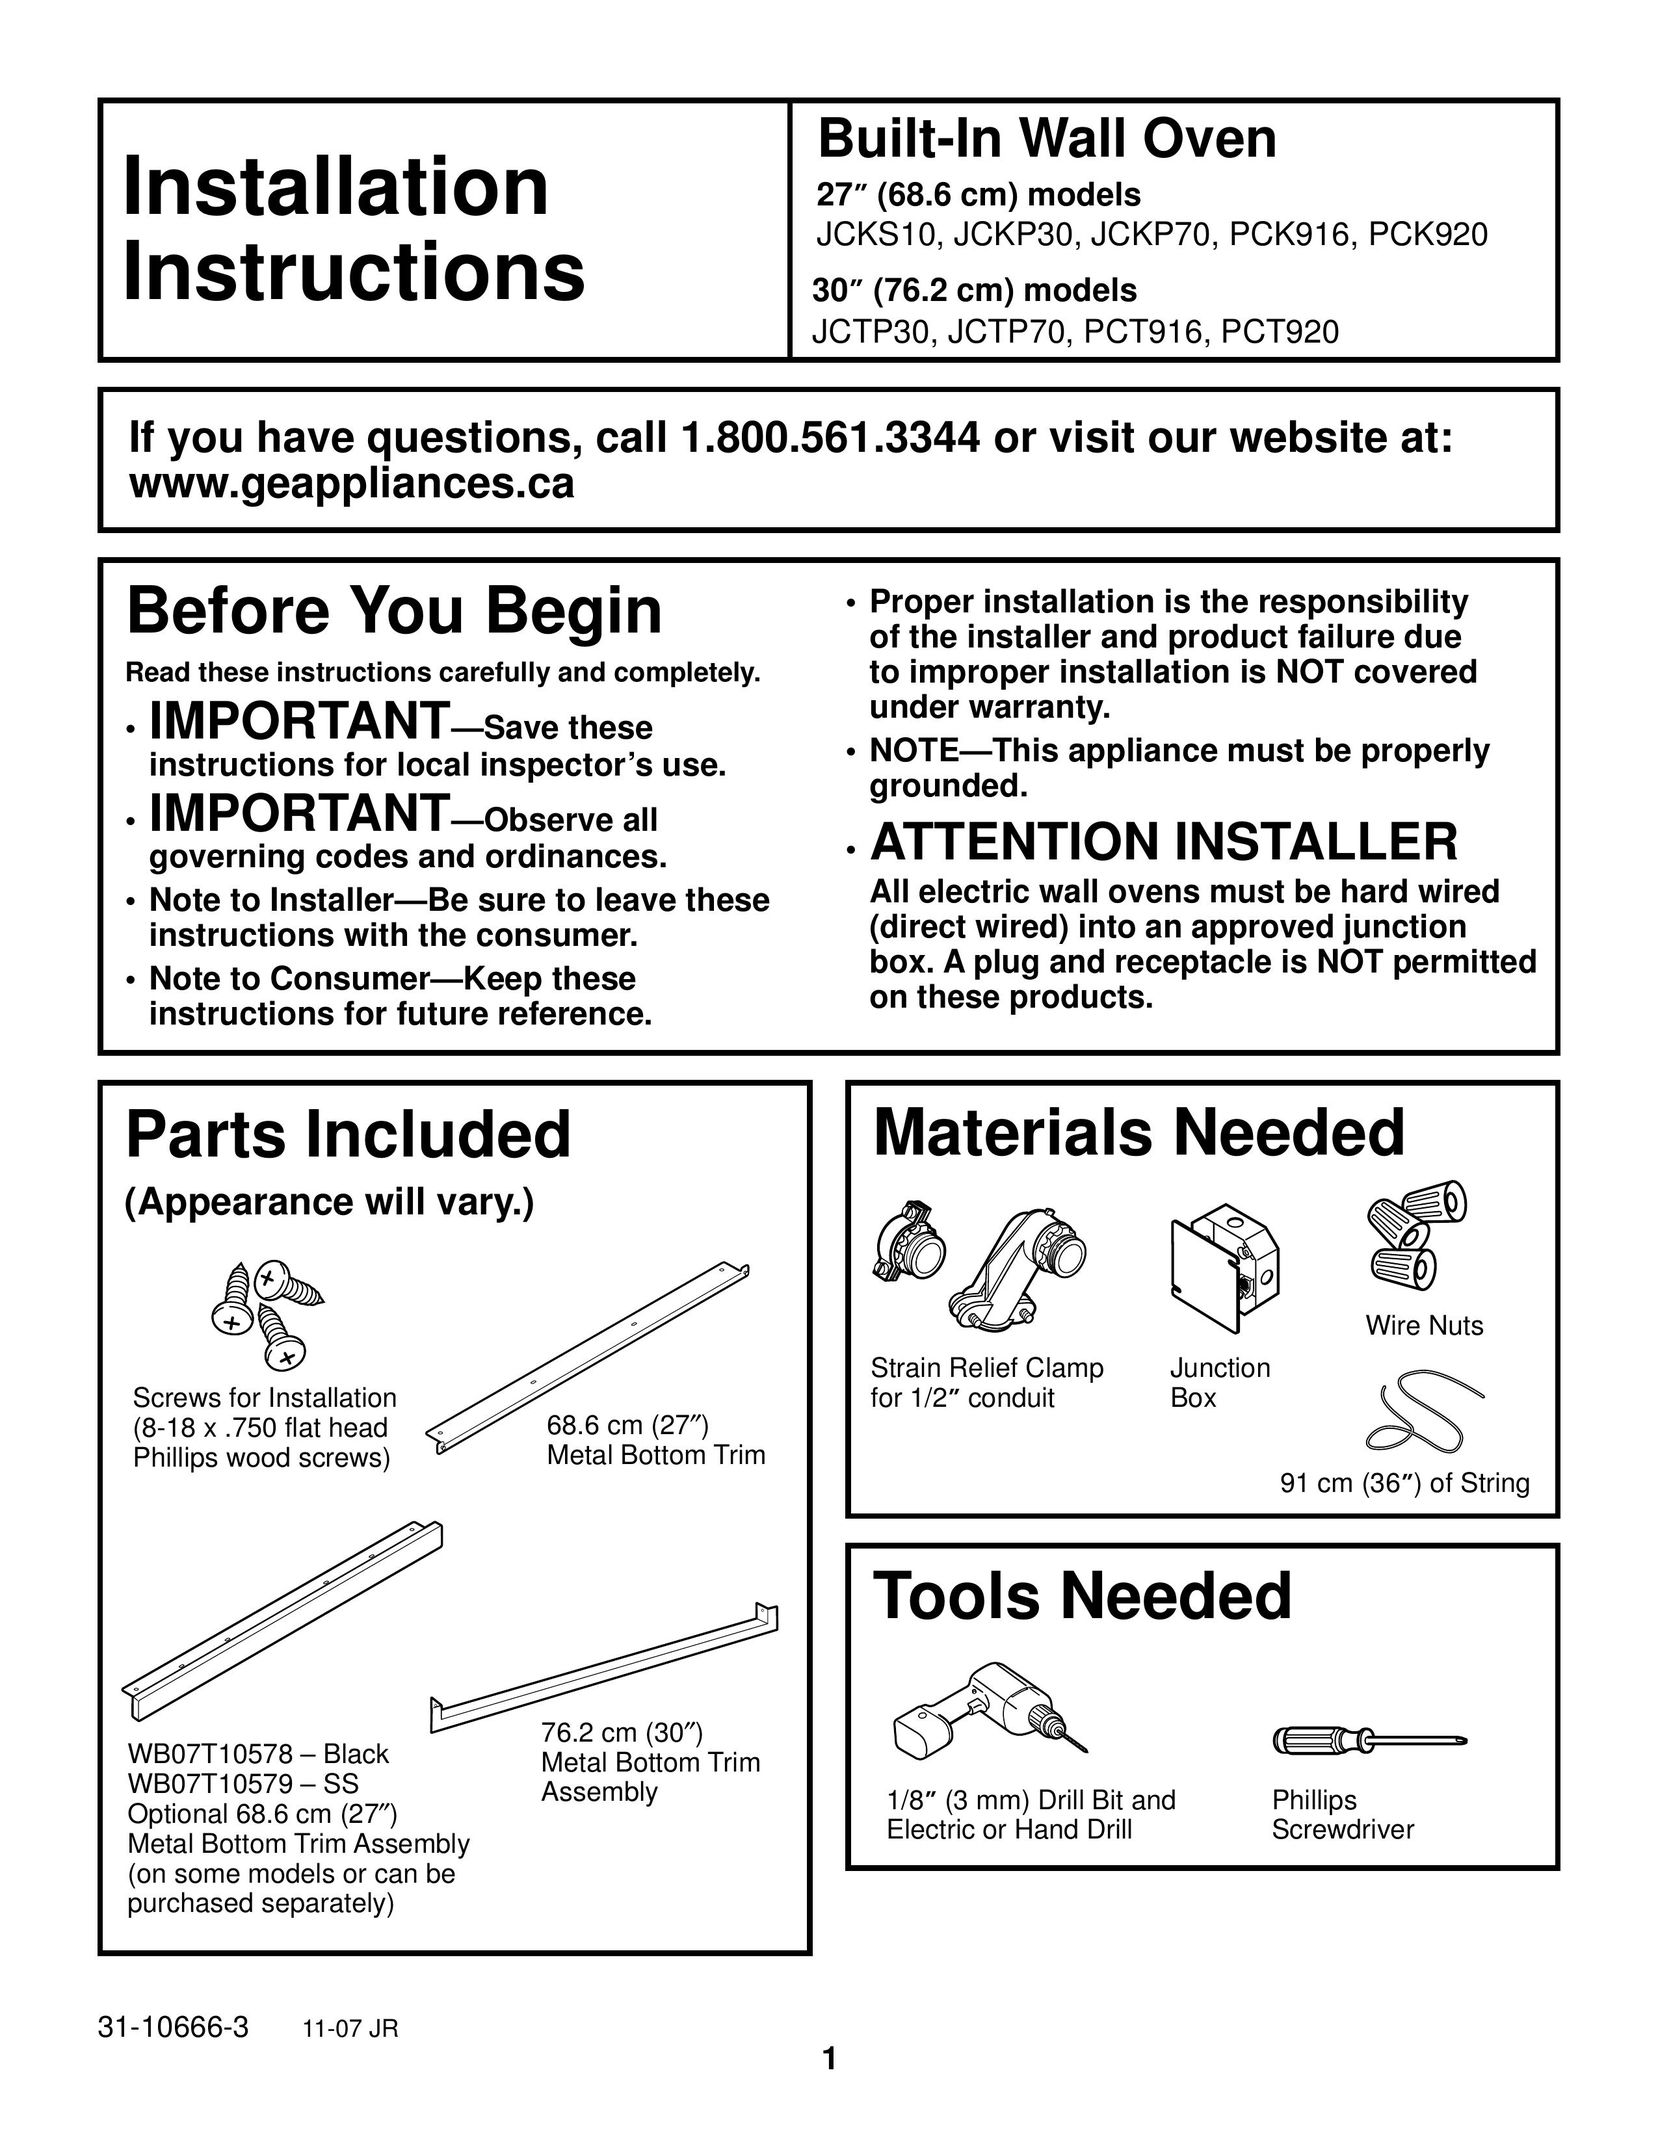 GE JCKS10 Oven User Manual